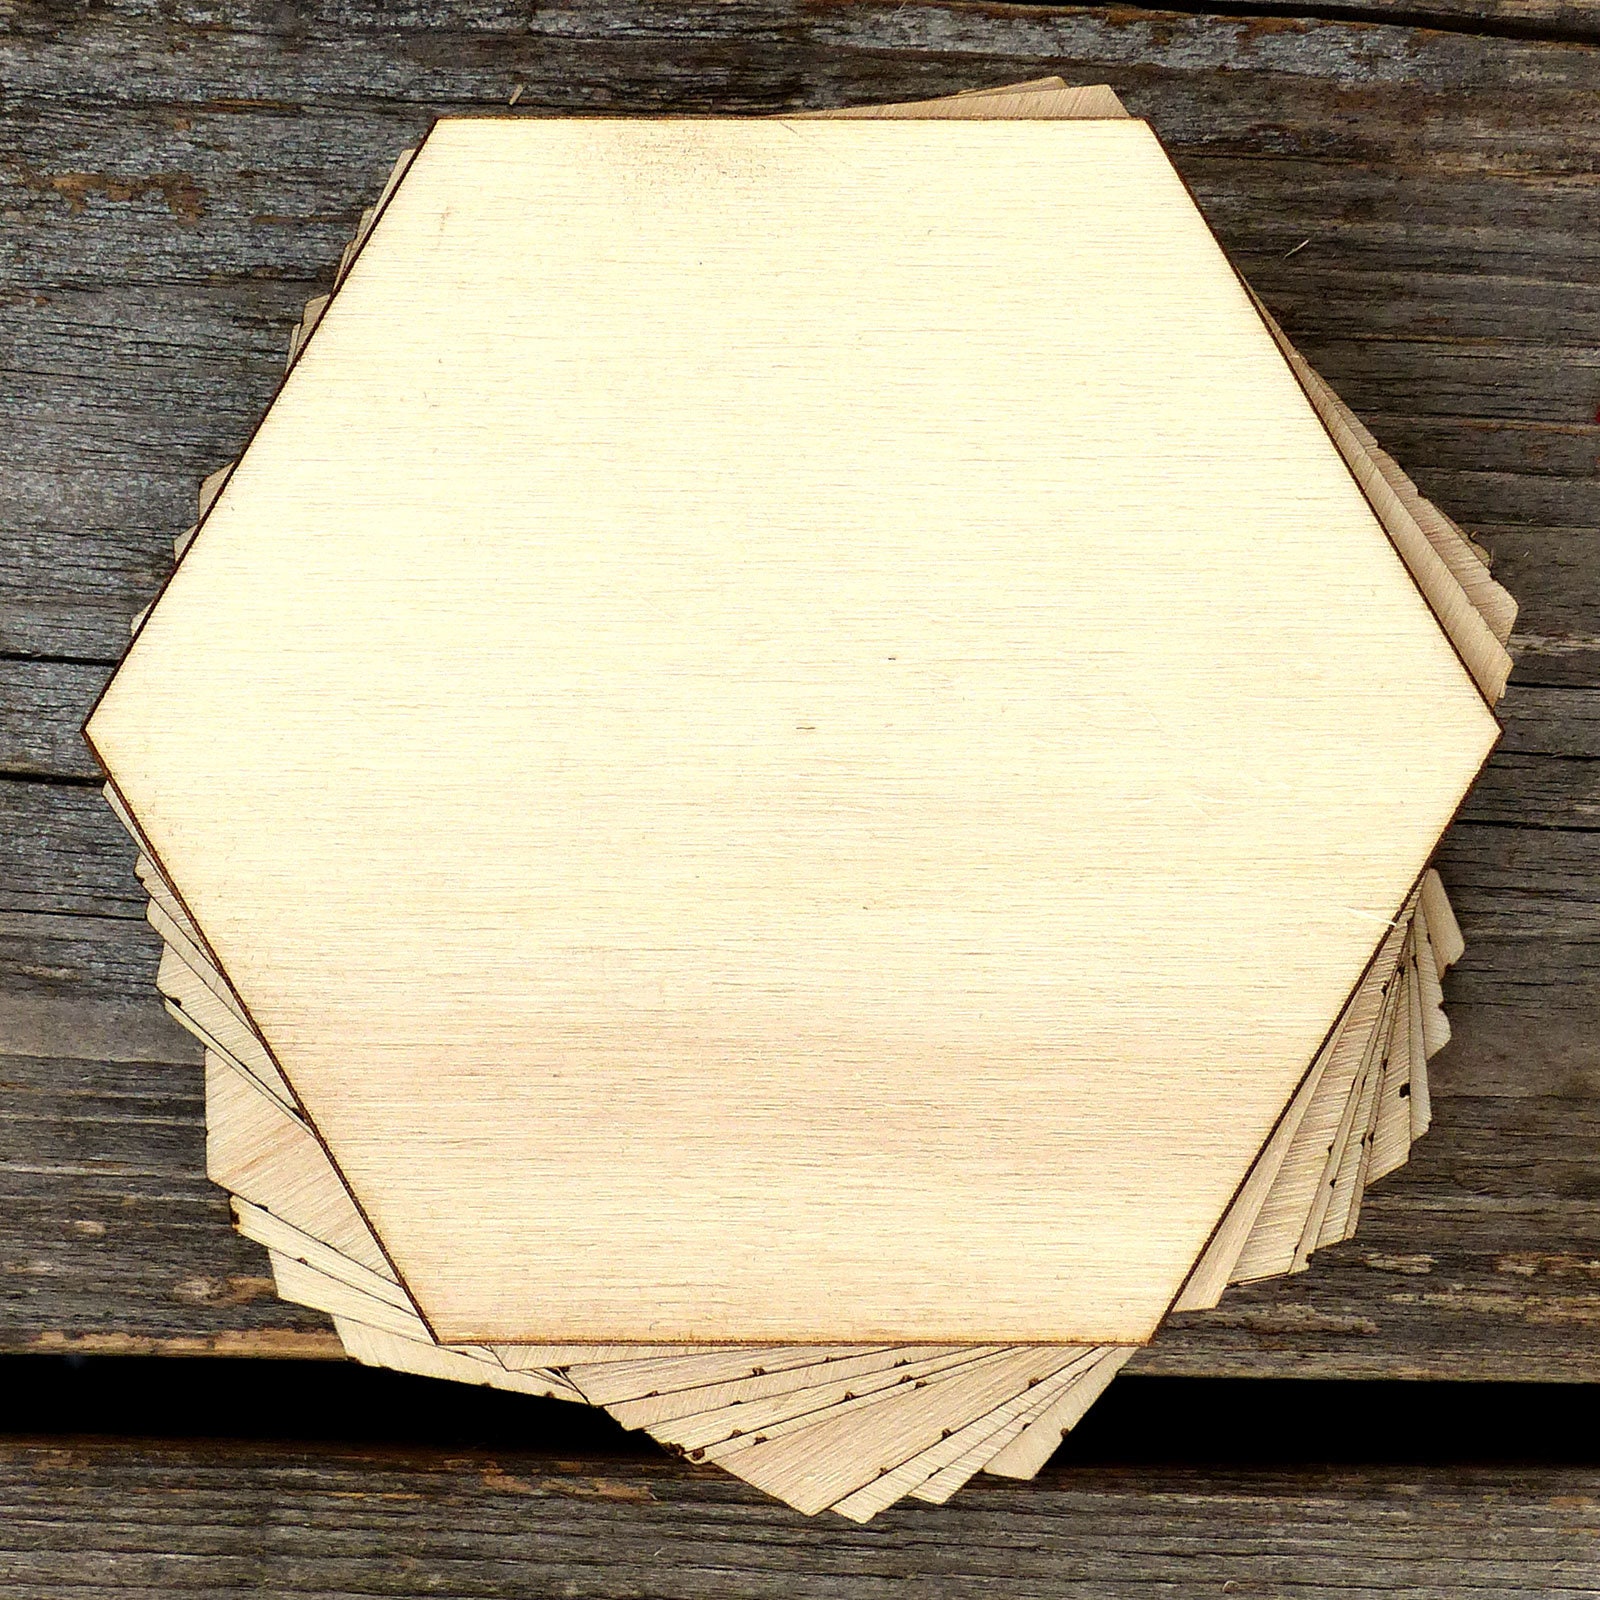 تسوق 100 Wooden Pieces Hexagon Wood Shape Beech Wood For DIY اونلاين